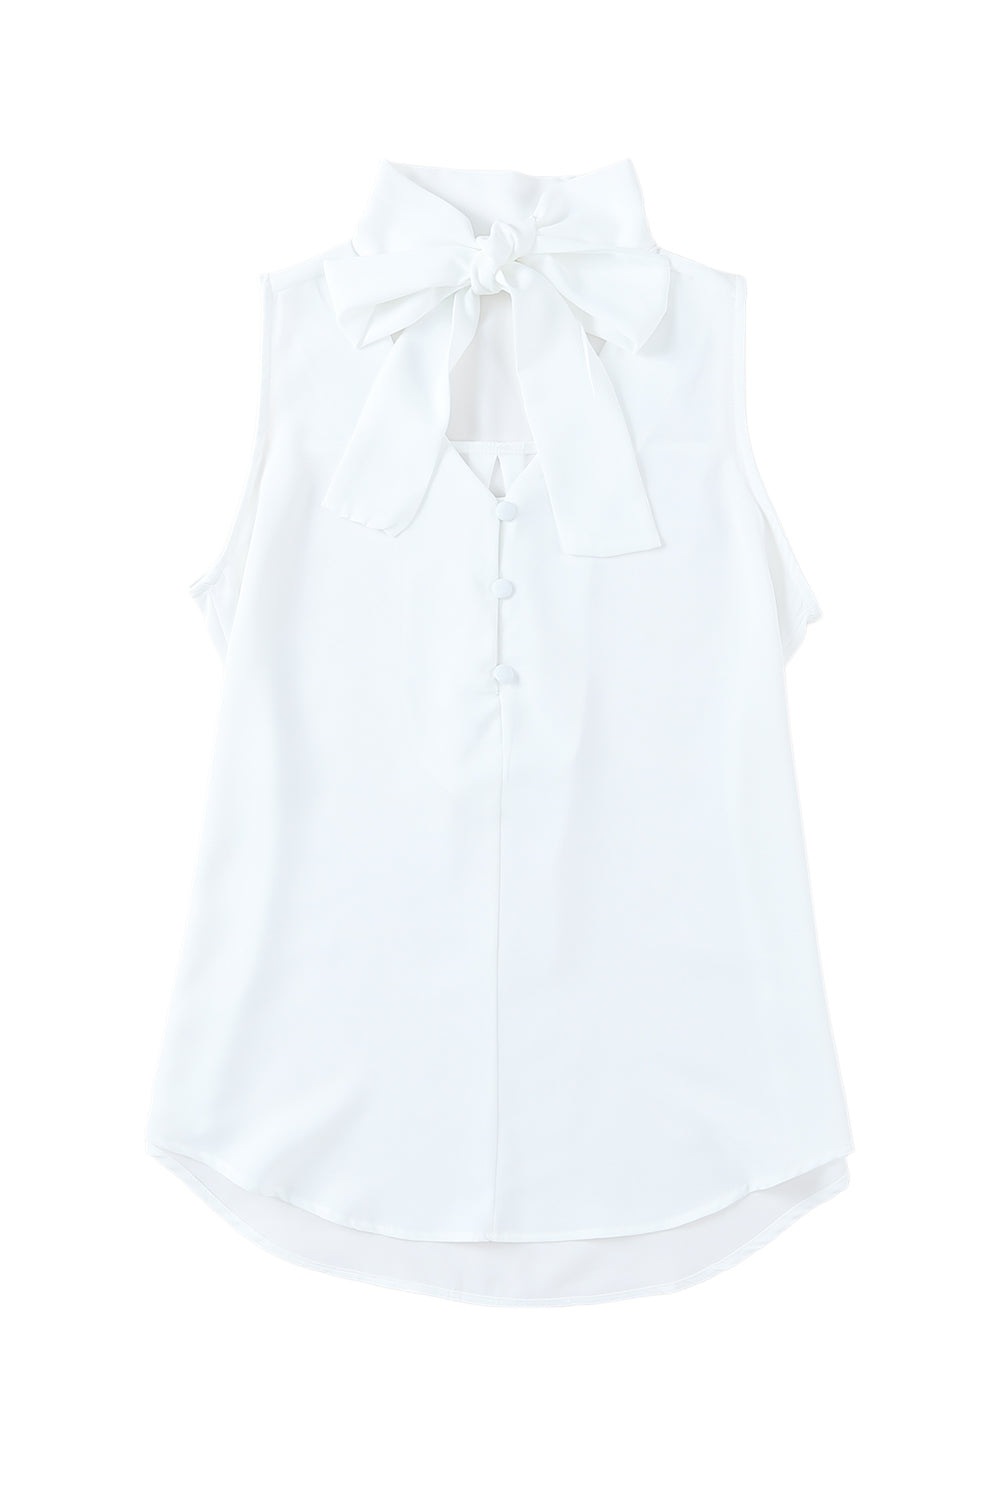 White Bow Tie V Neck Sleeveless Shirt Tank Tops JT's Designer Fashion